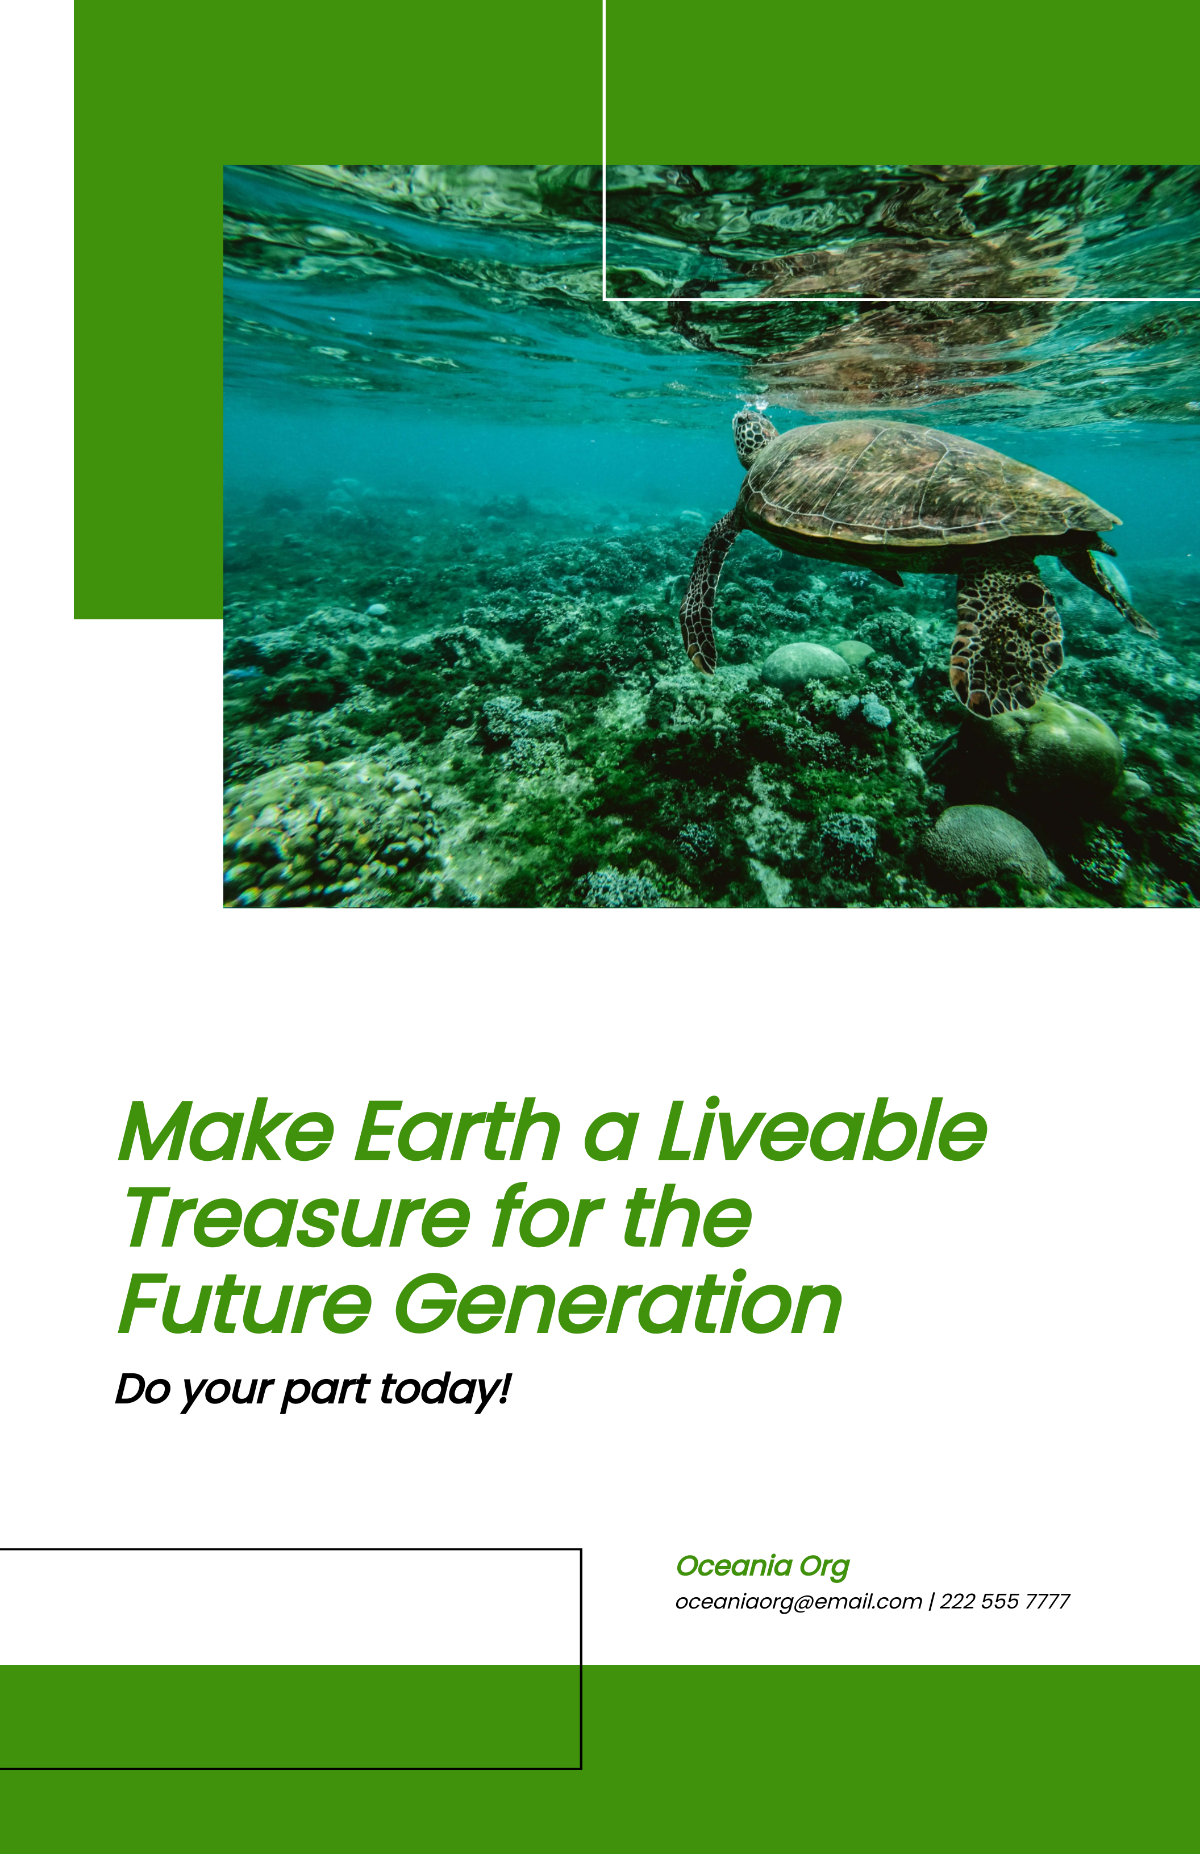 Environmental Protection Poster